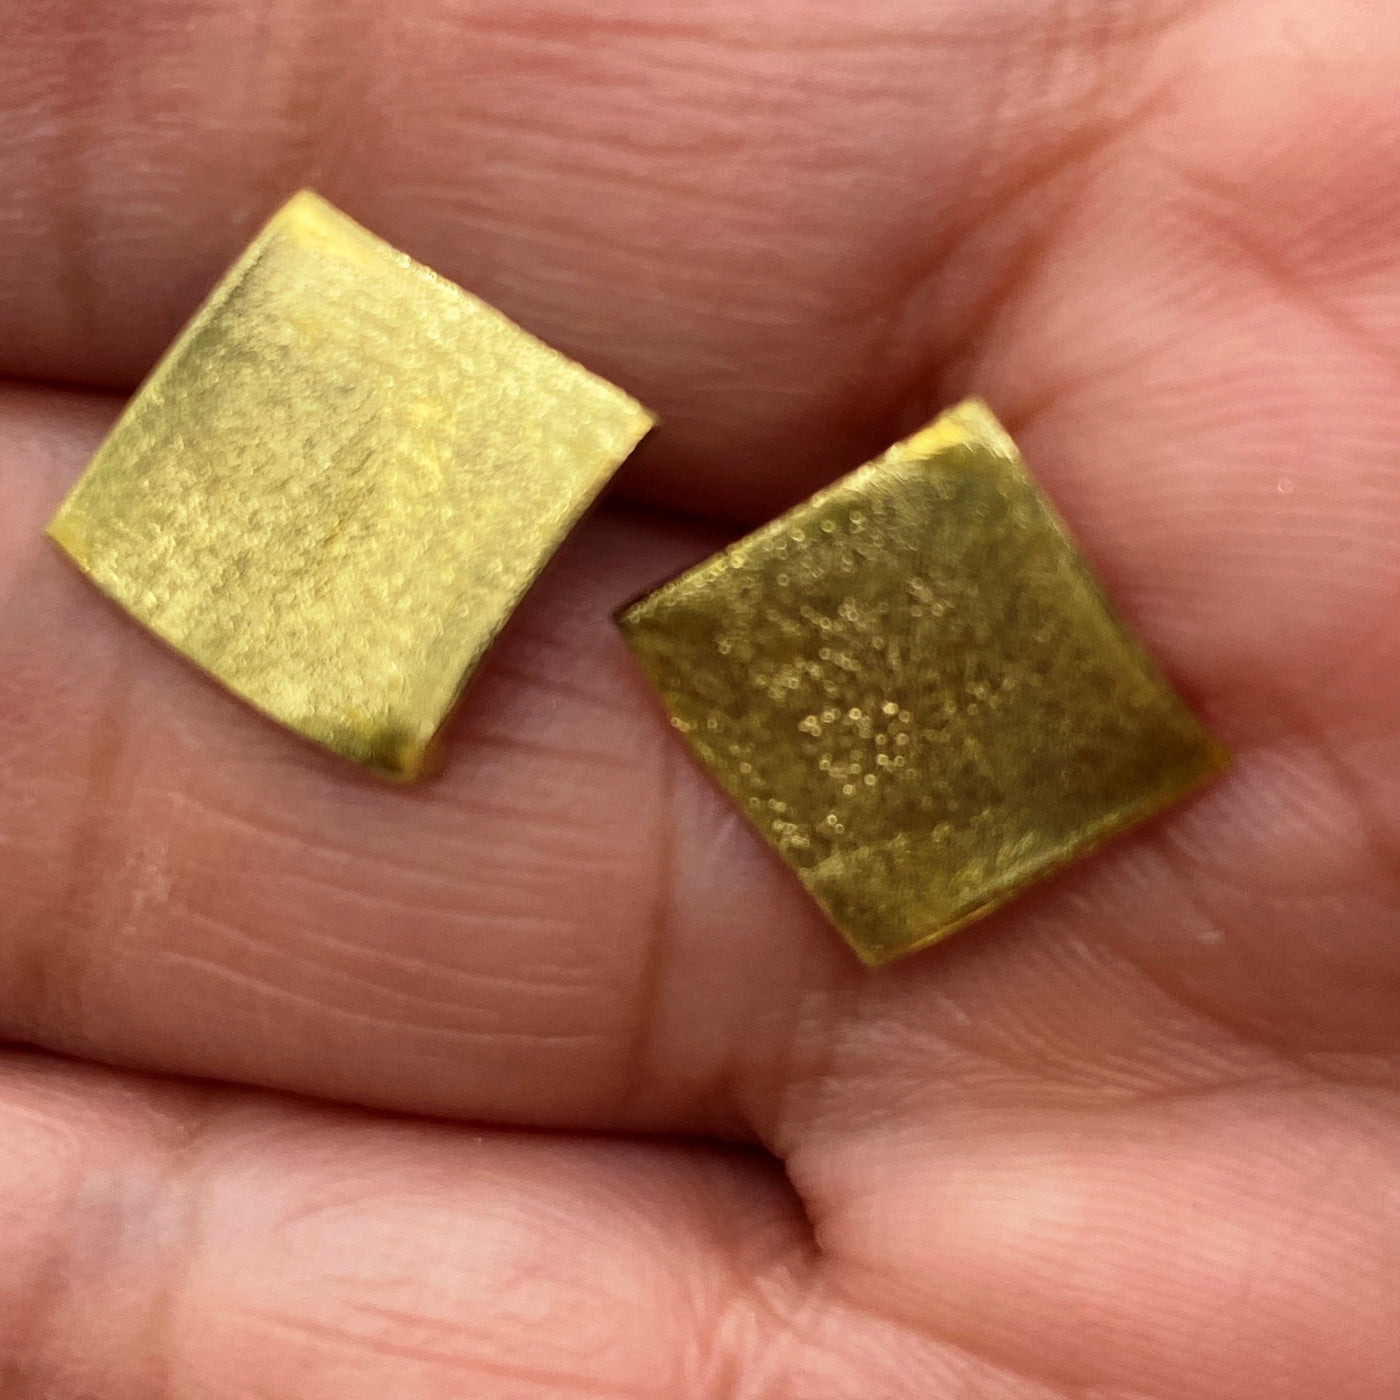 Square yellow brass studs 1 cm texturized